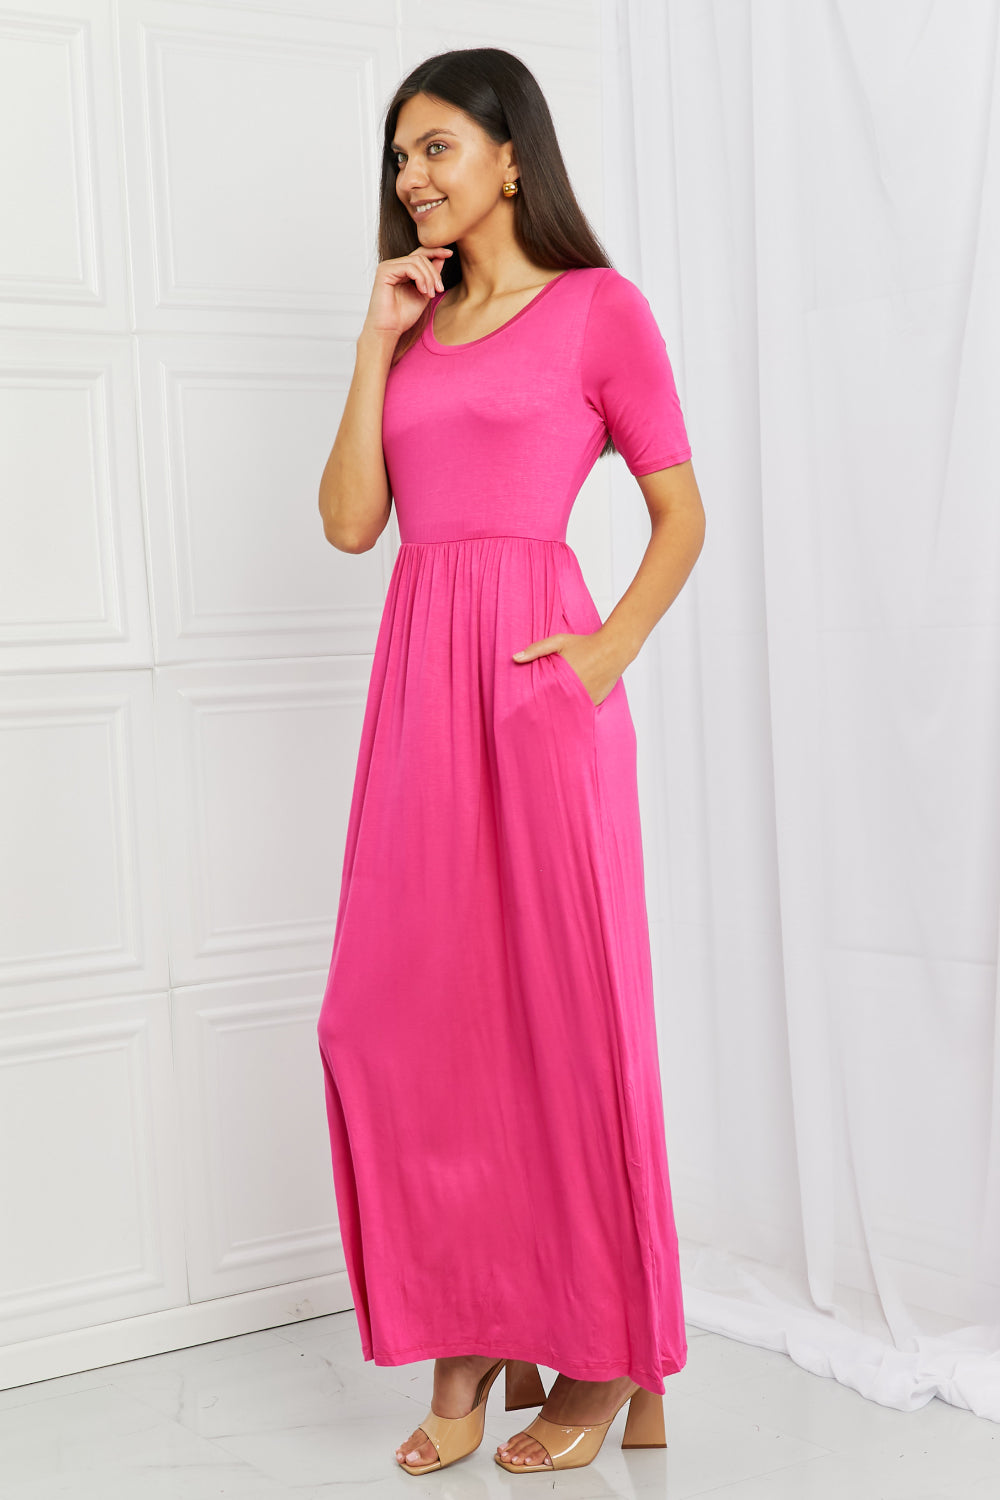 Celeste Sweetheart Full Size Short Sleeve Maxi Dress in Hot Pink